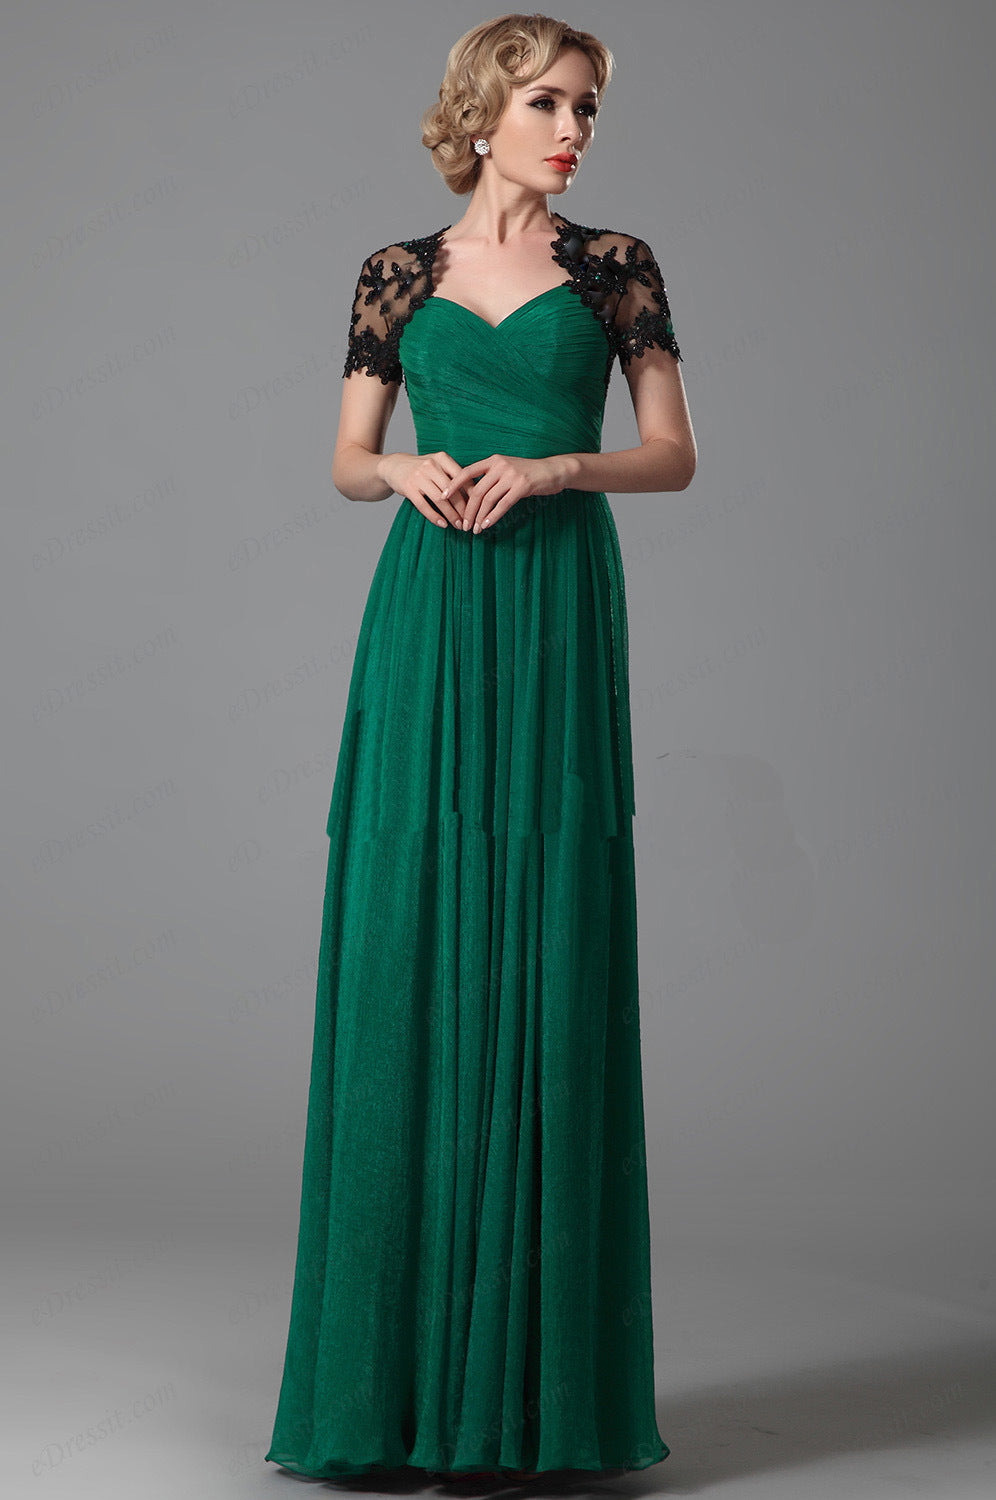 Elegant Chiffon Long Evening Dresses-Dresses-Free Shipping at meselling99